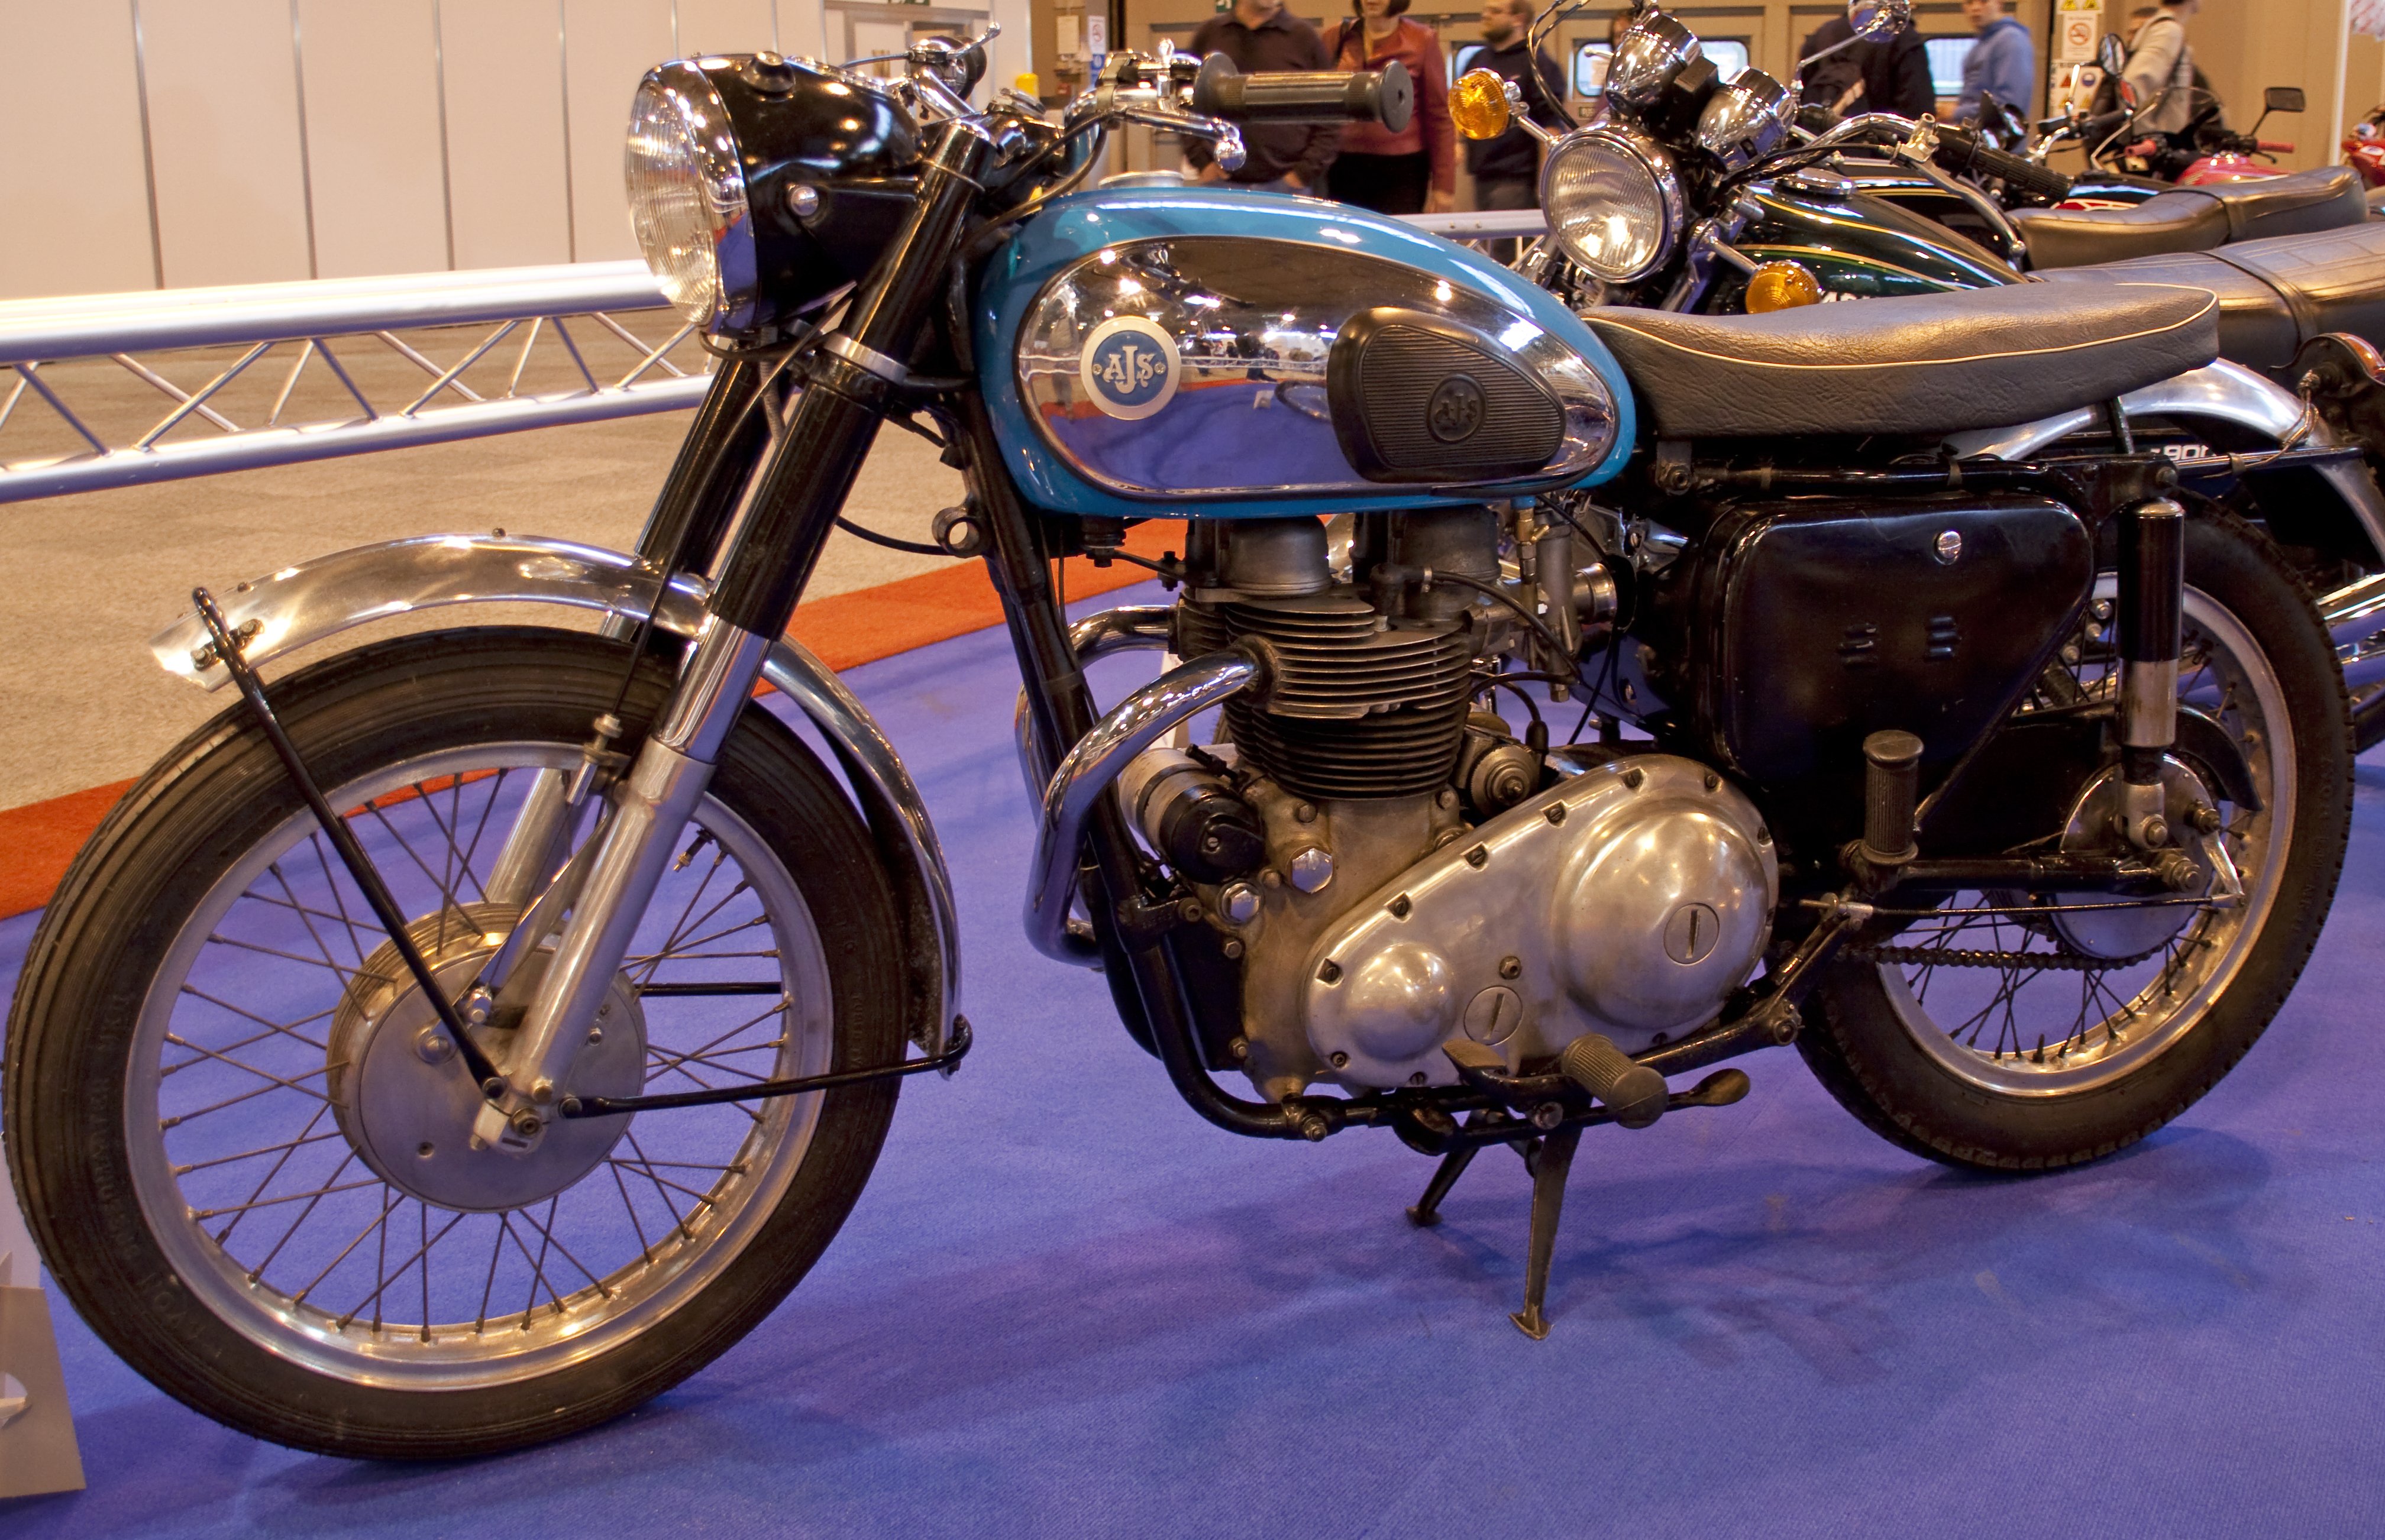 ajs, Motorcycle, Motorbike, Bike, Classic, Vintage, Retro, Race, Racing, British Wallpaper